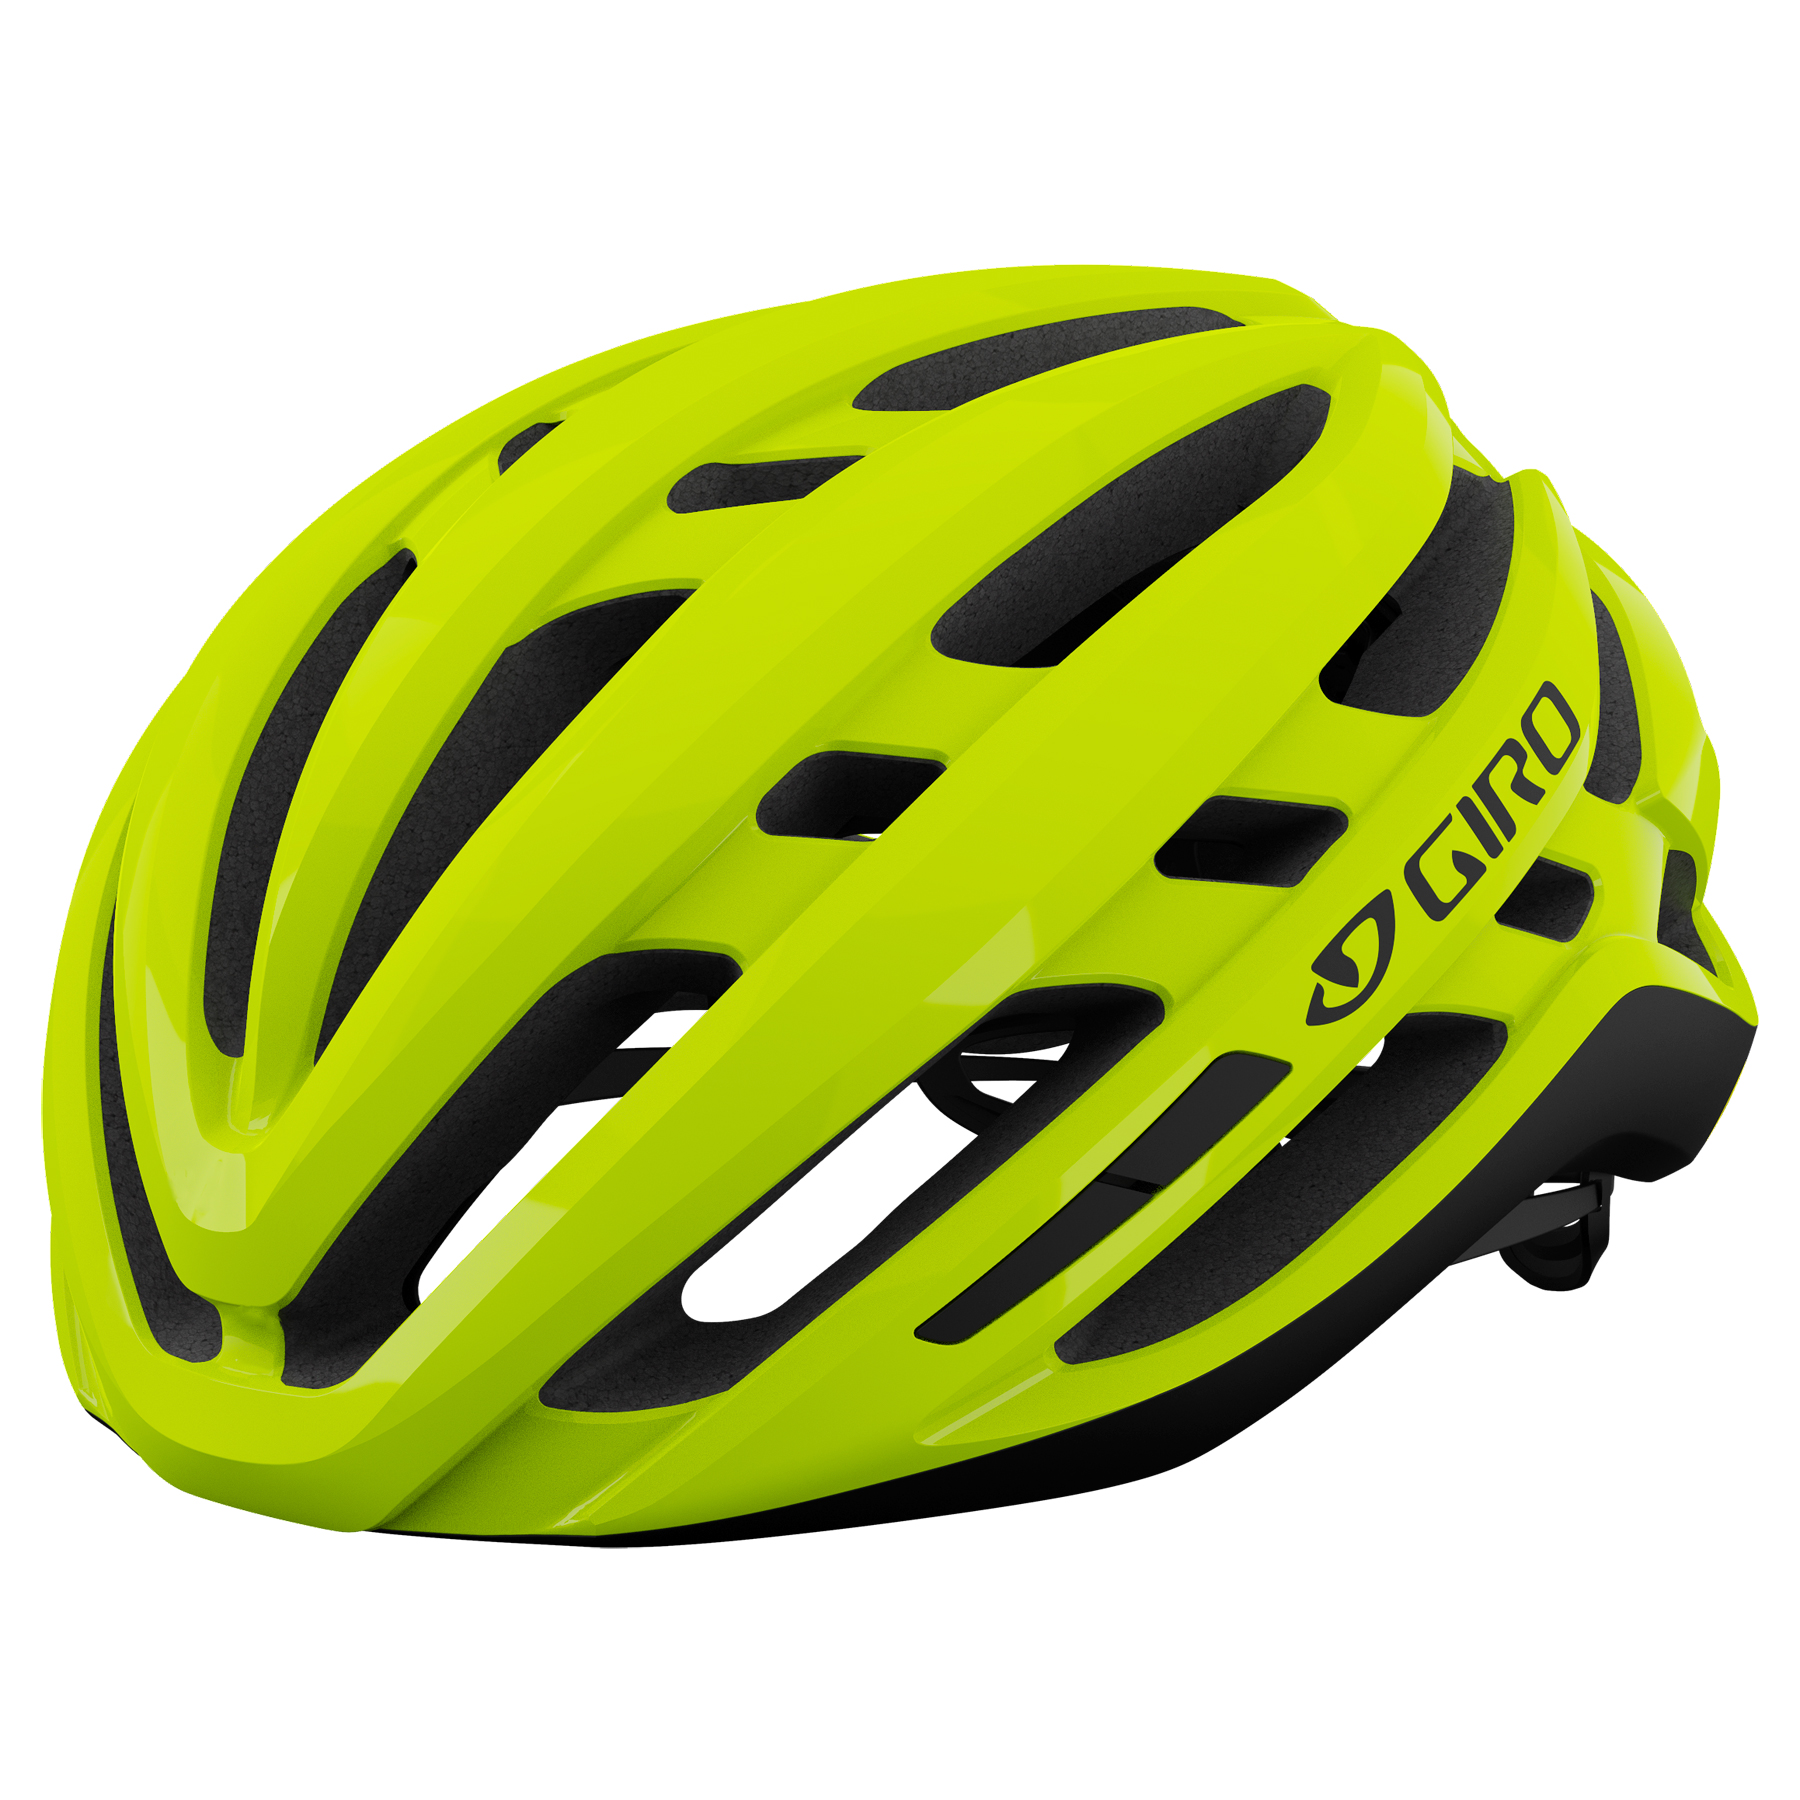 Image of Giro Agilis Helmet - highlight yellow